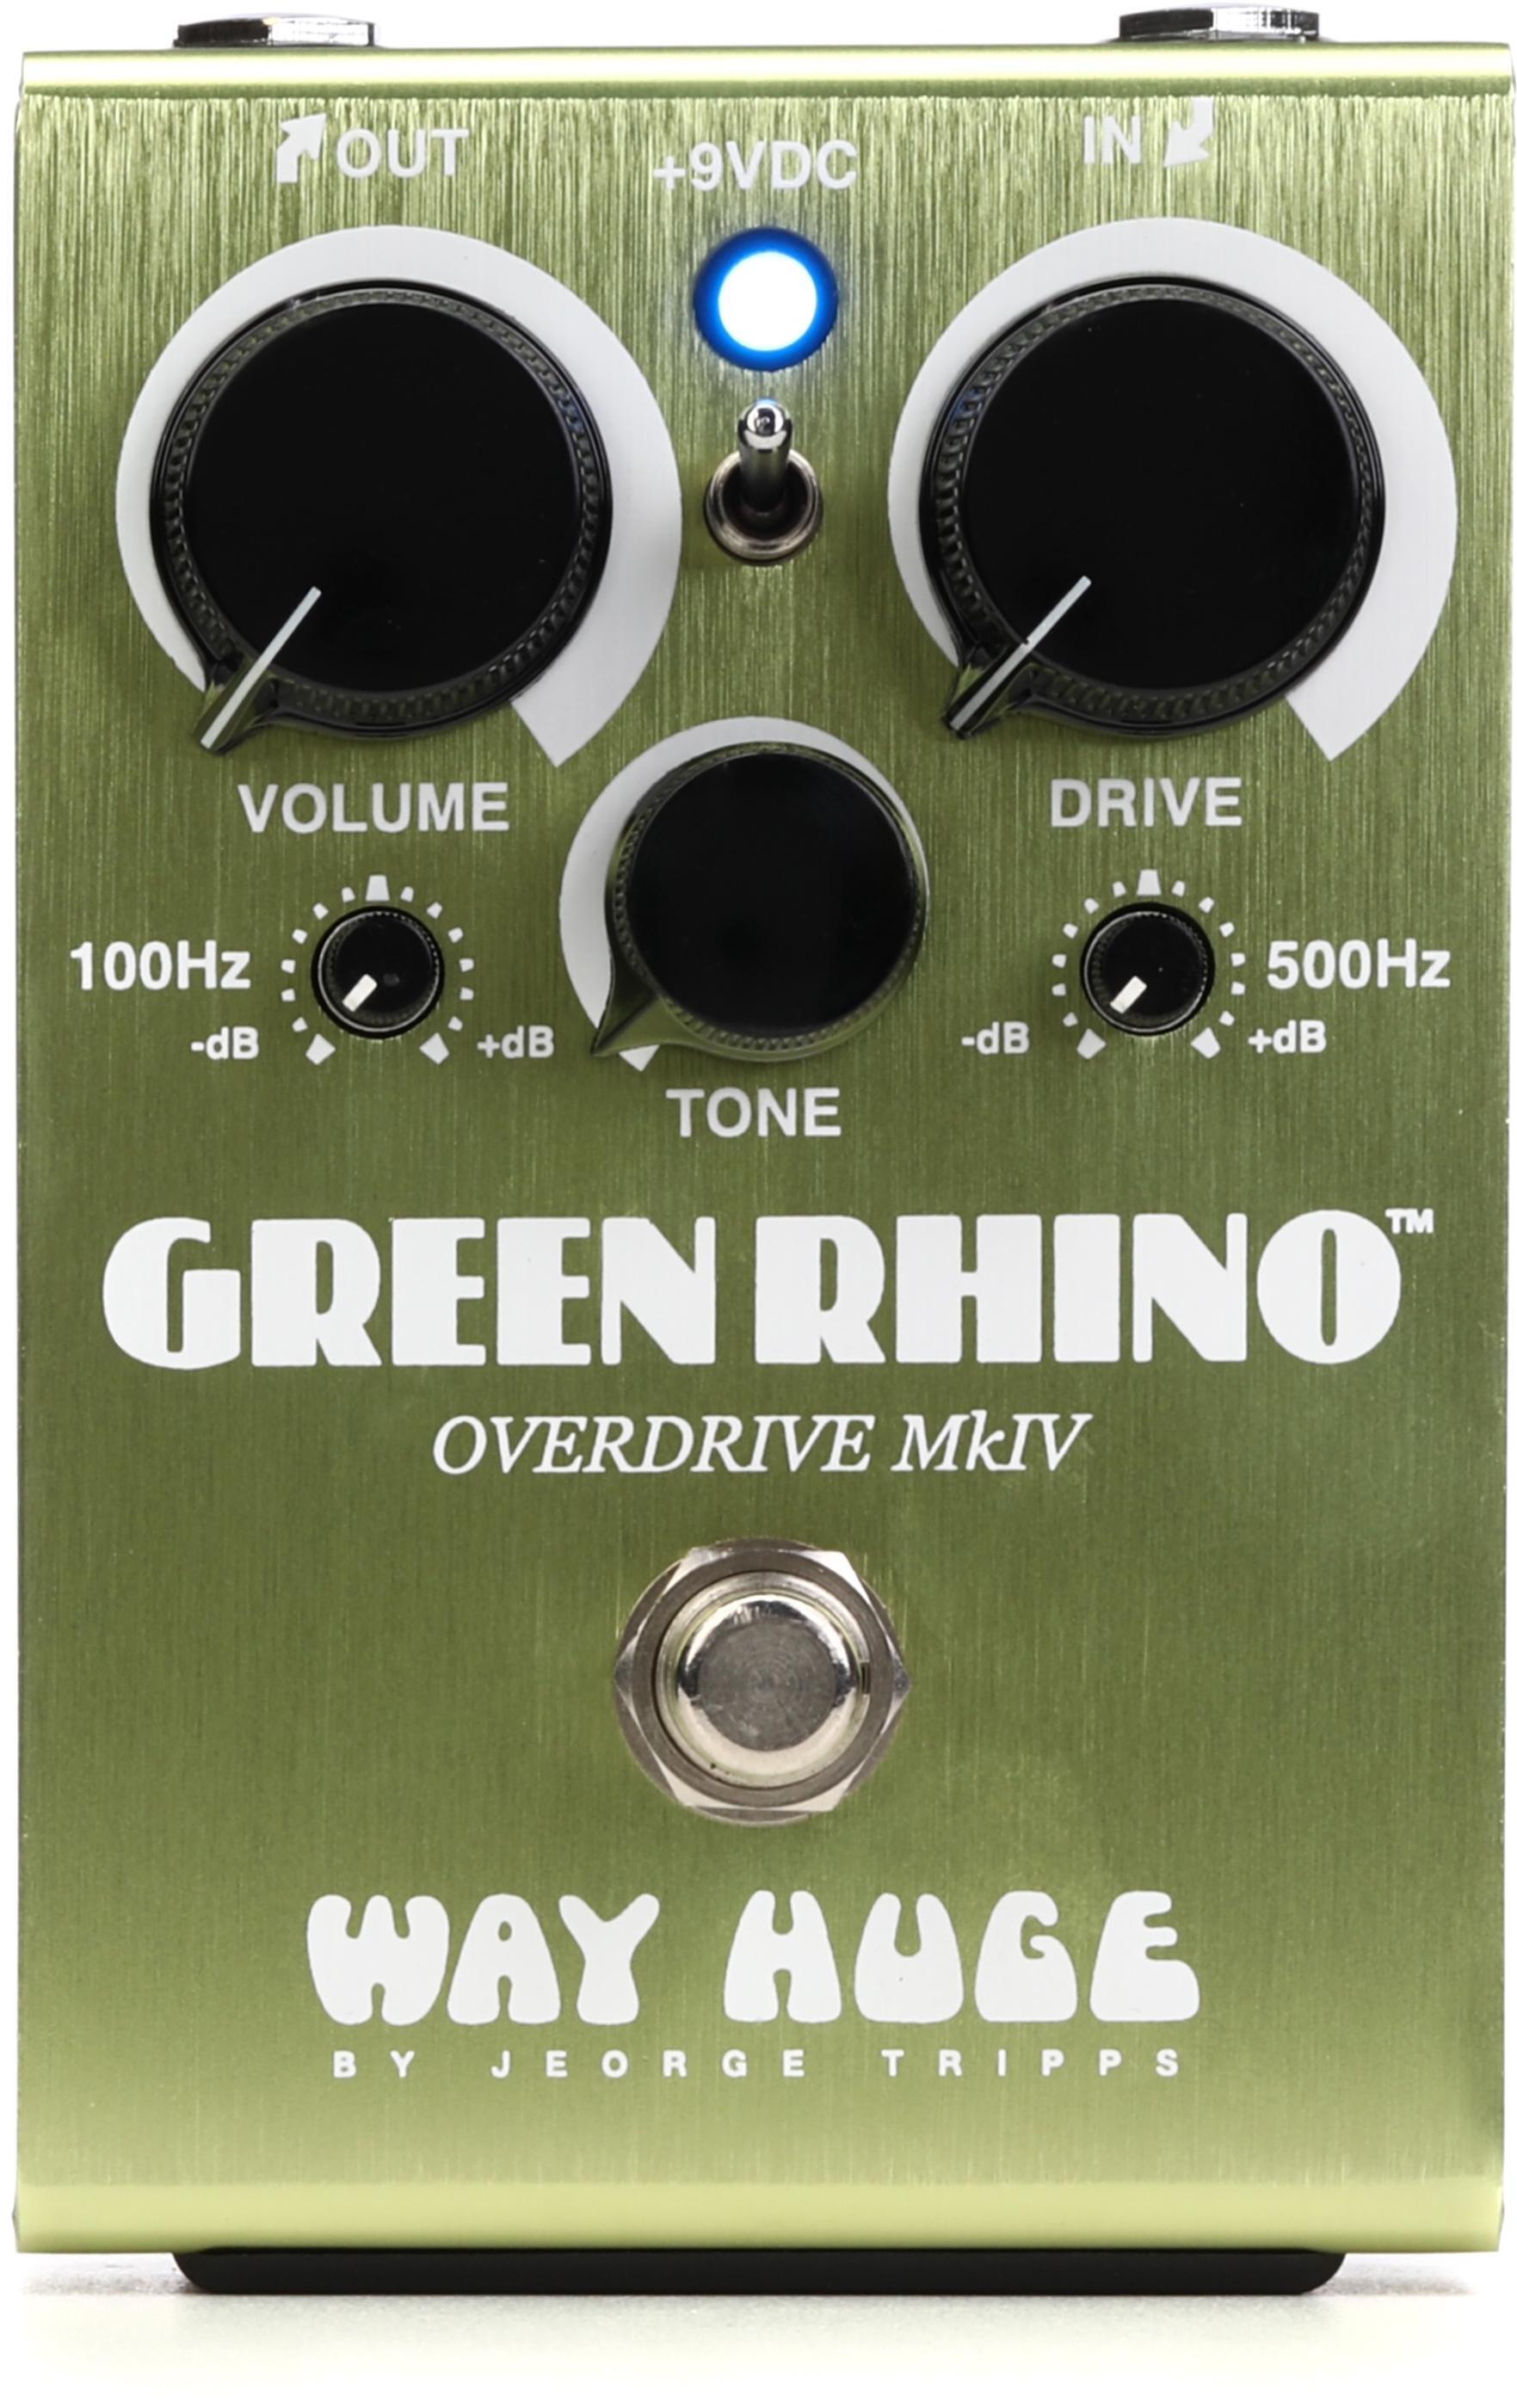 Way Huge Green Rhino MkIV Overdrive Pedal